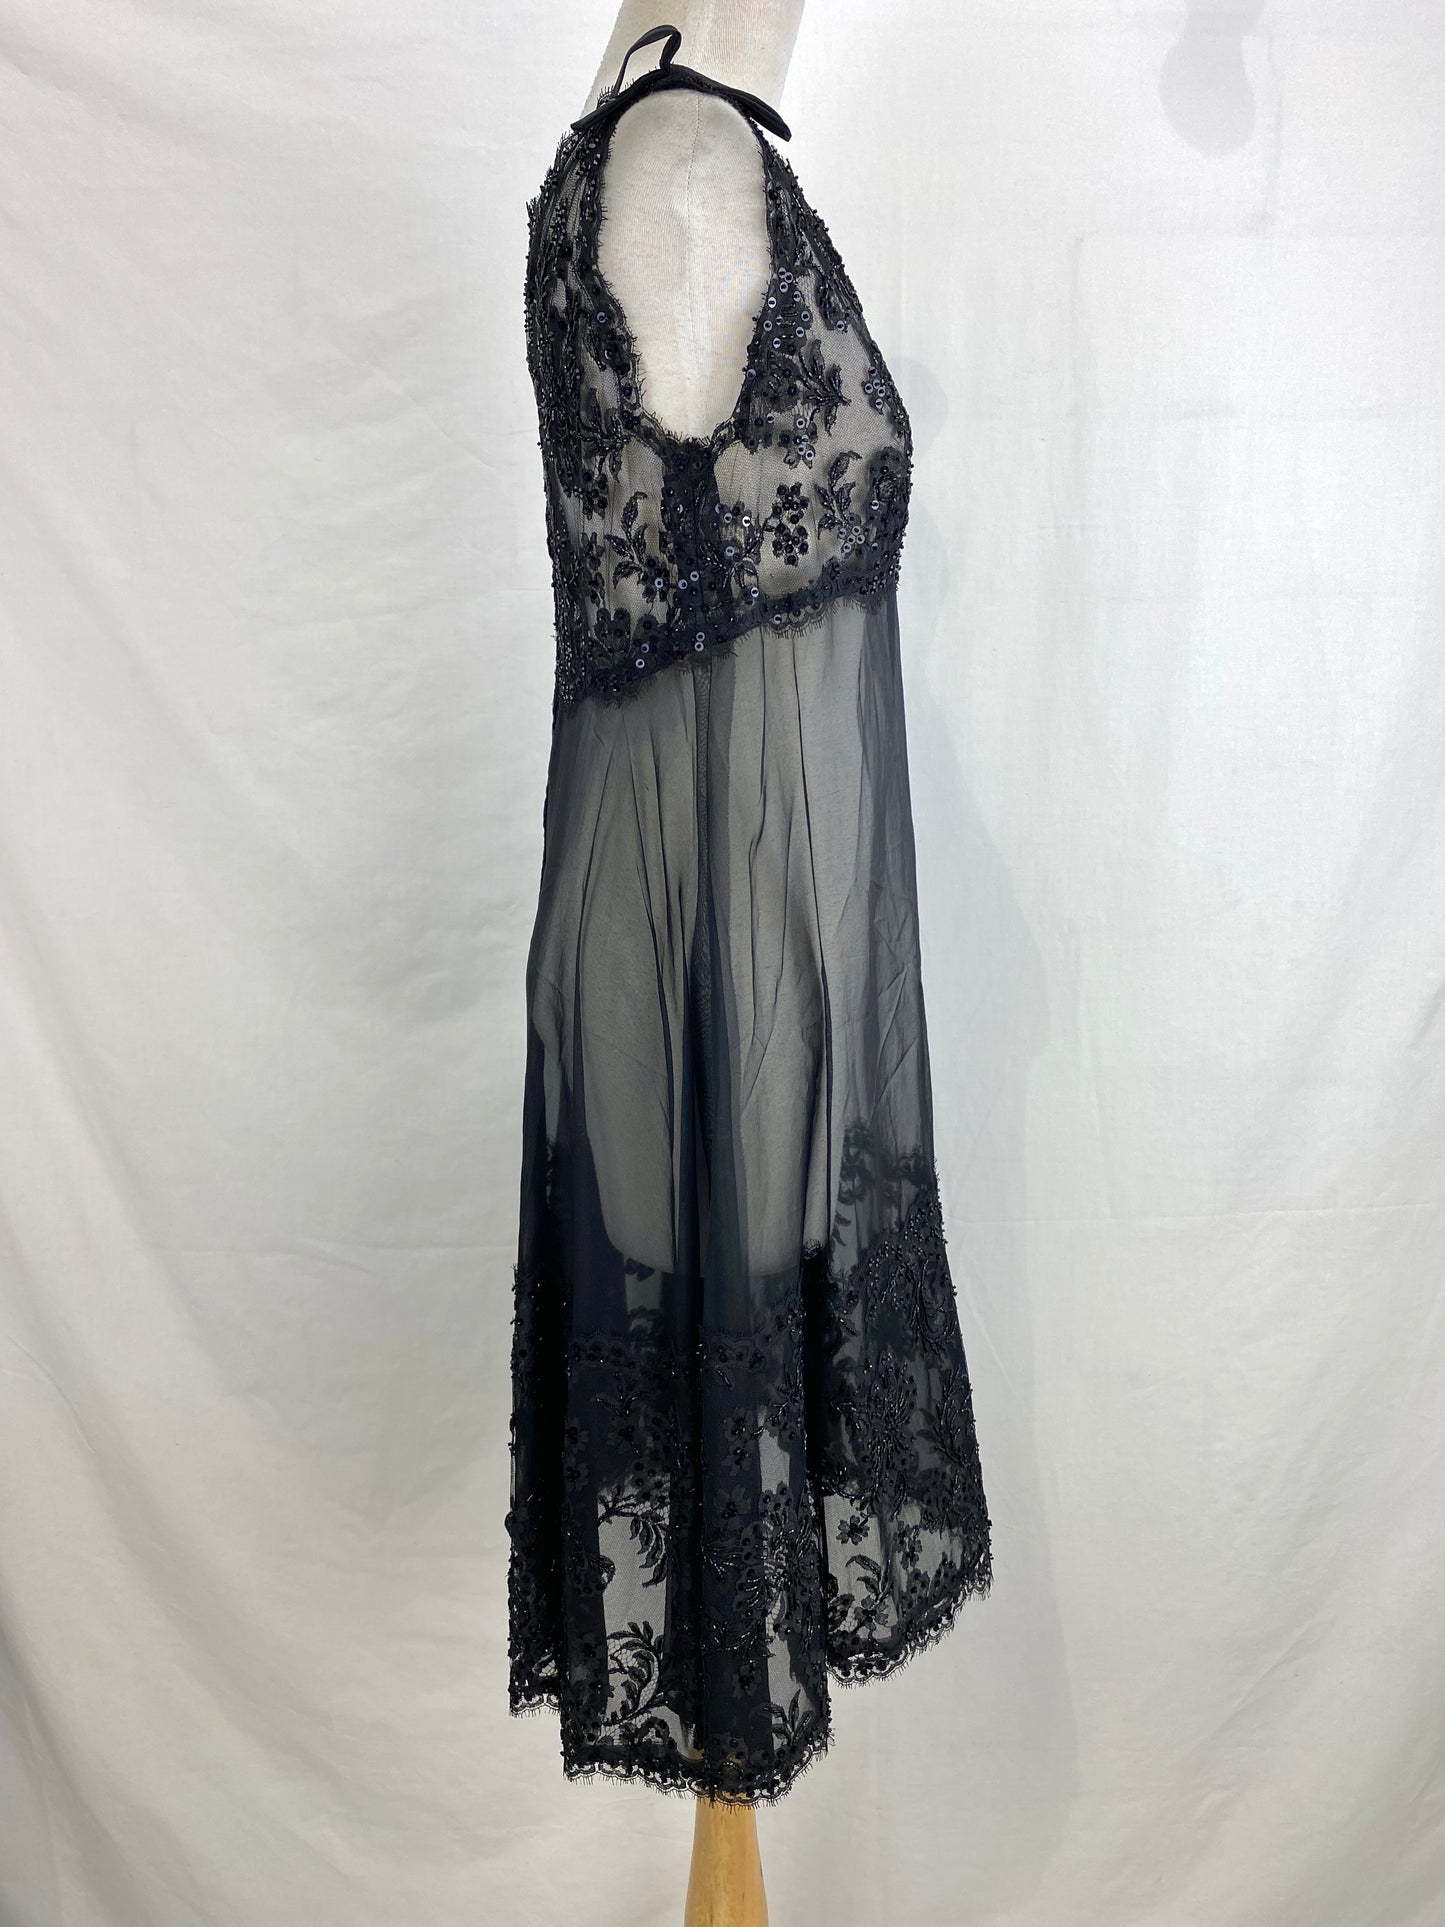 Vintage 1960s Sheer Black Beaded Lace Party Dress, Medium